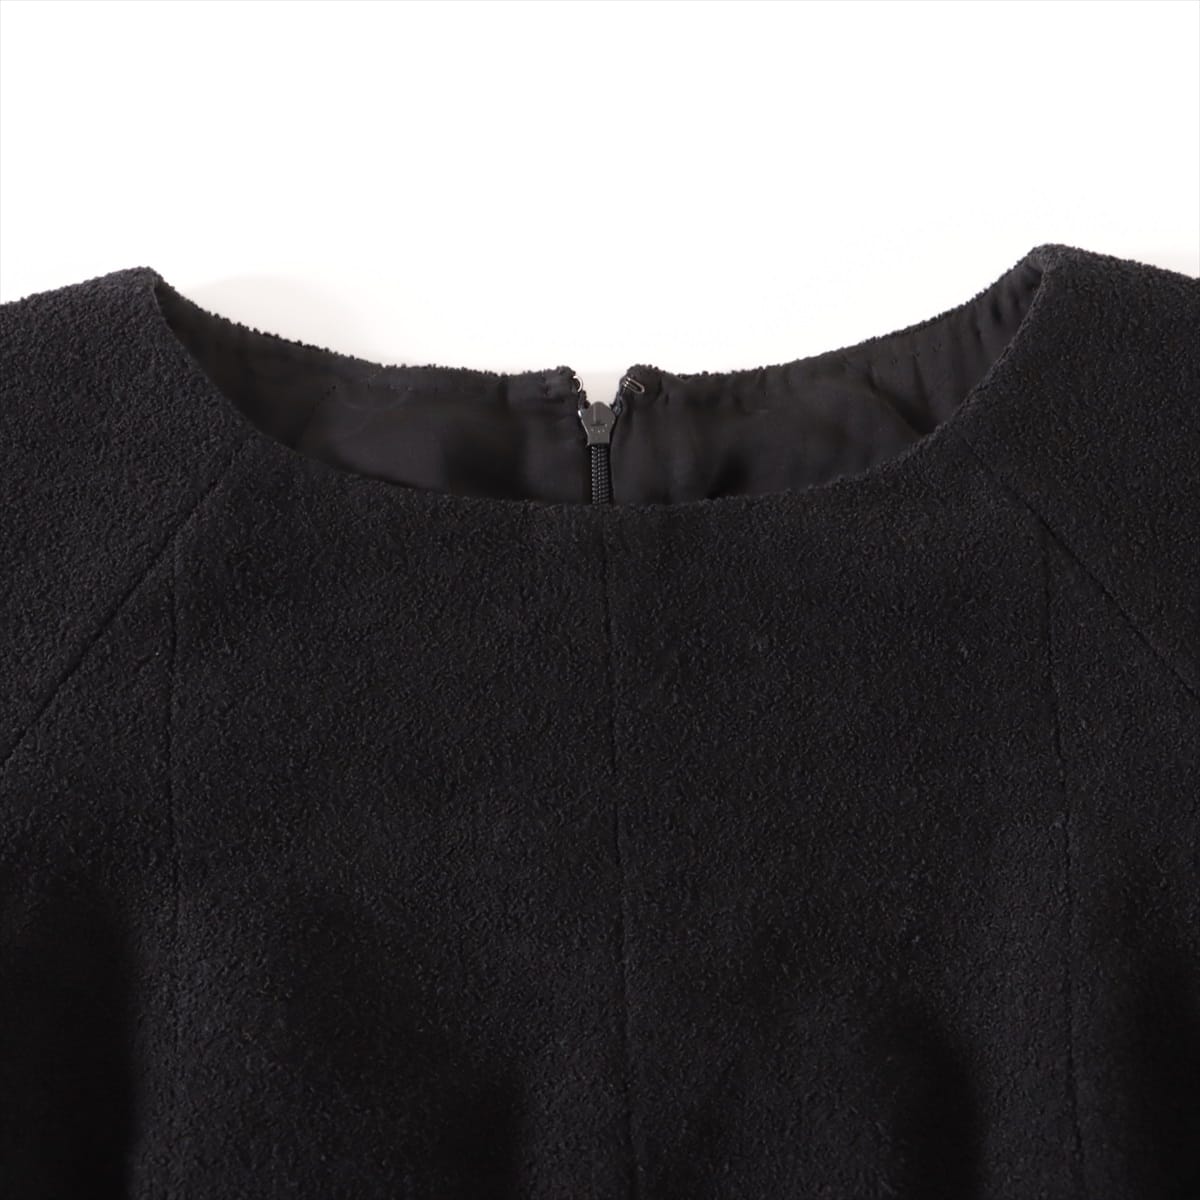 Chanel Coco Mark P41 Wool & nylon Dress 40 Ladies' Black